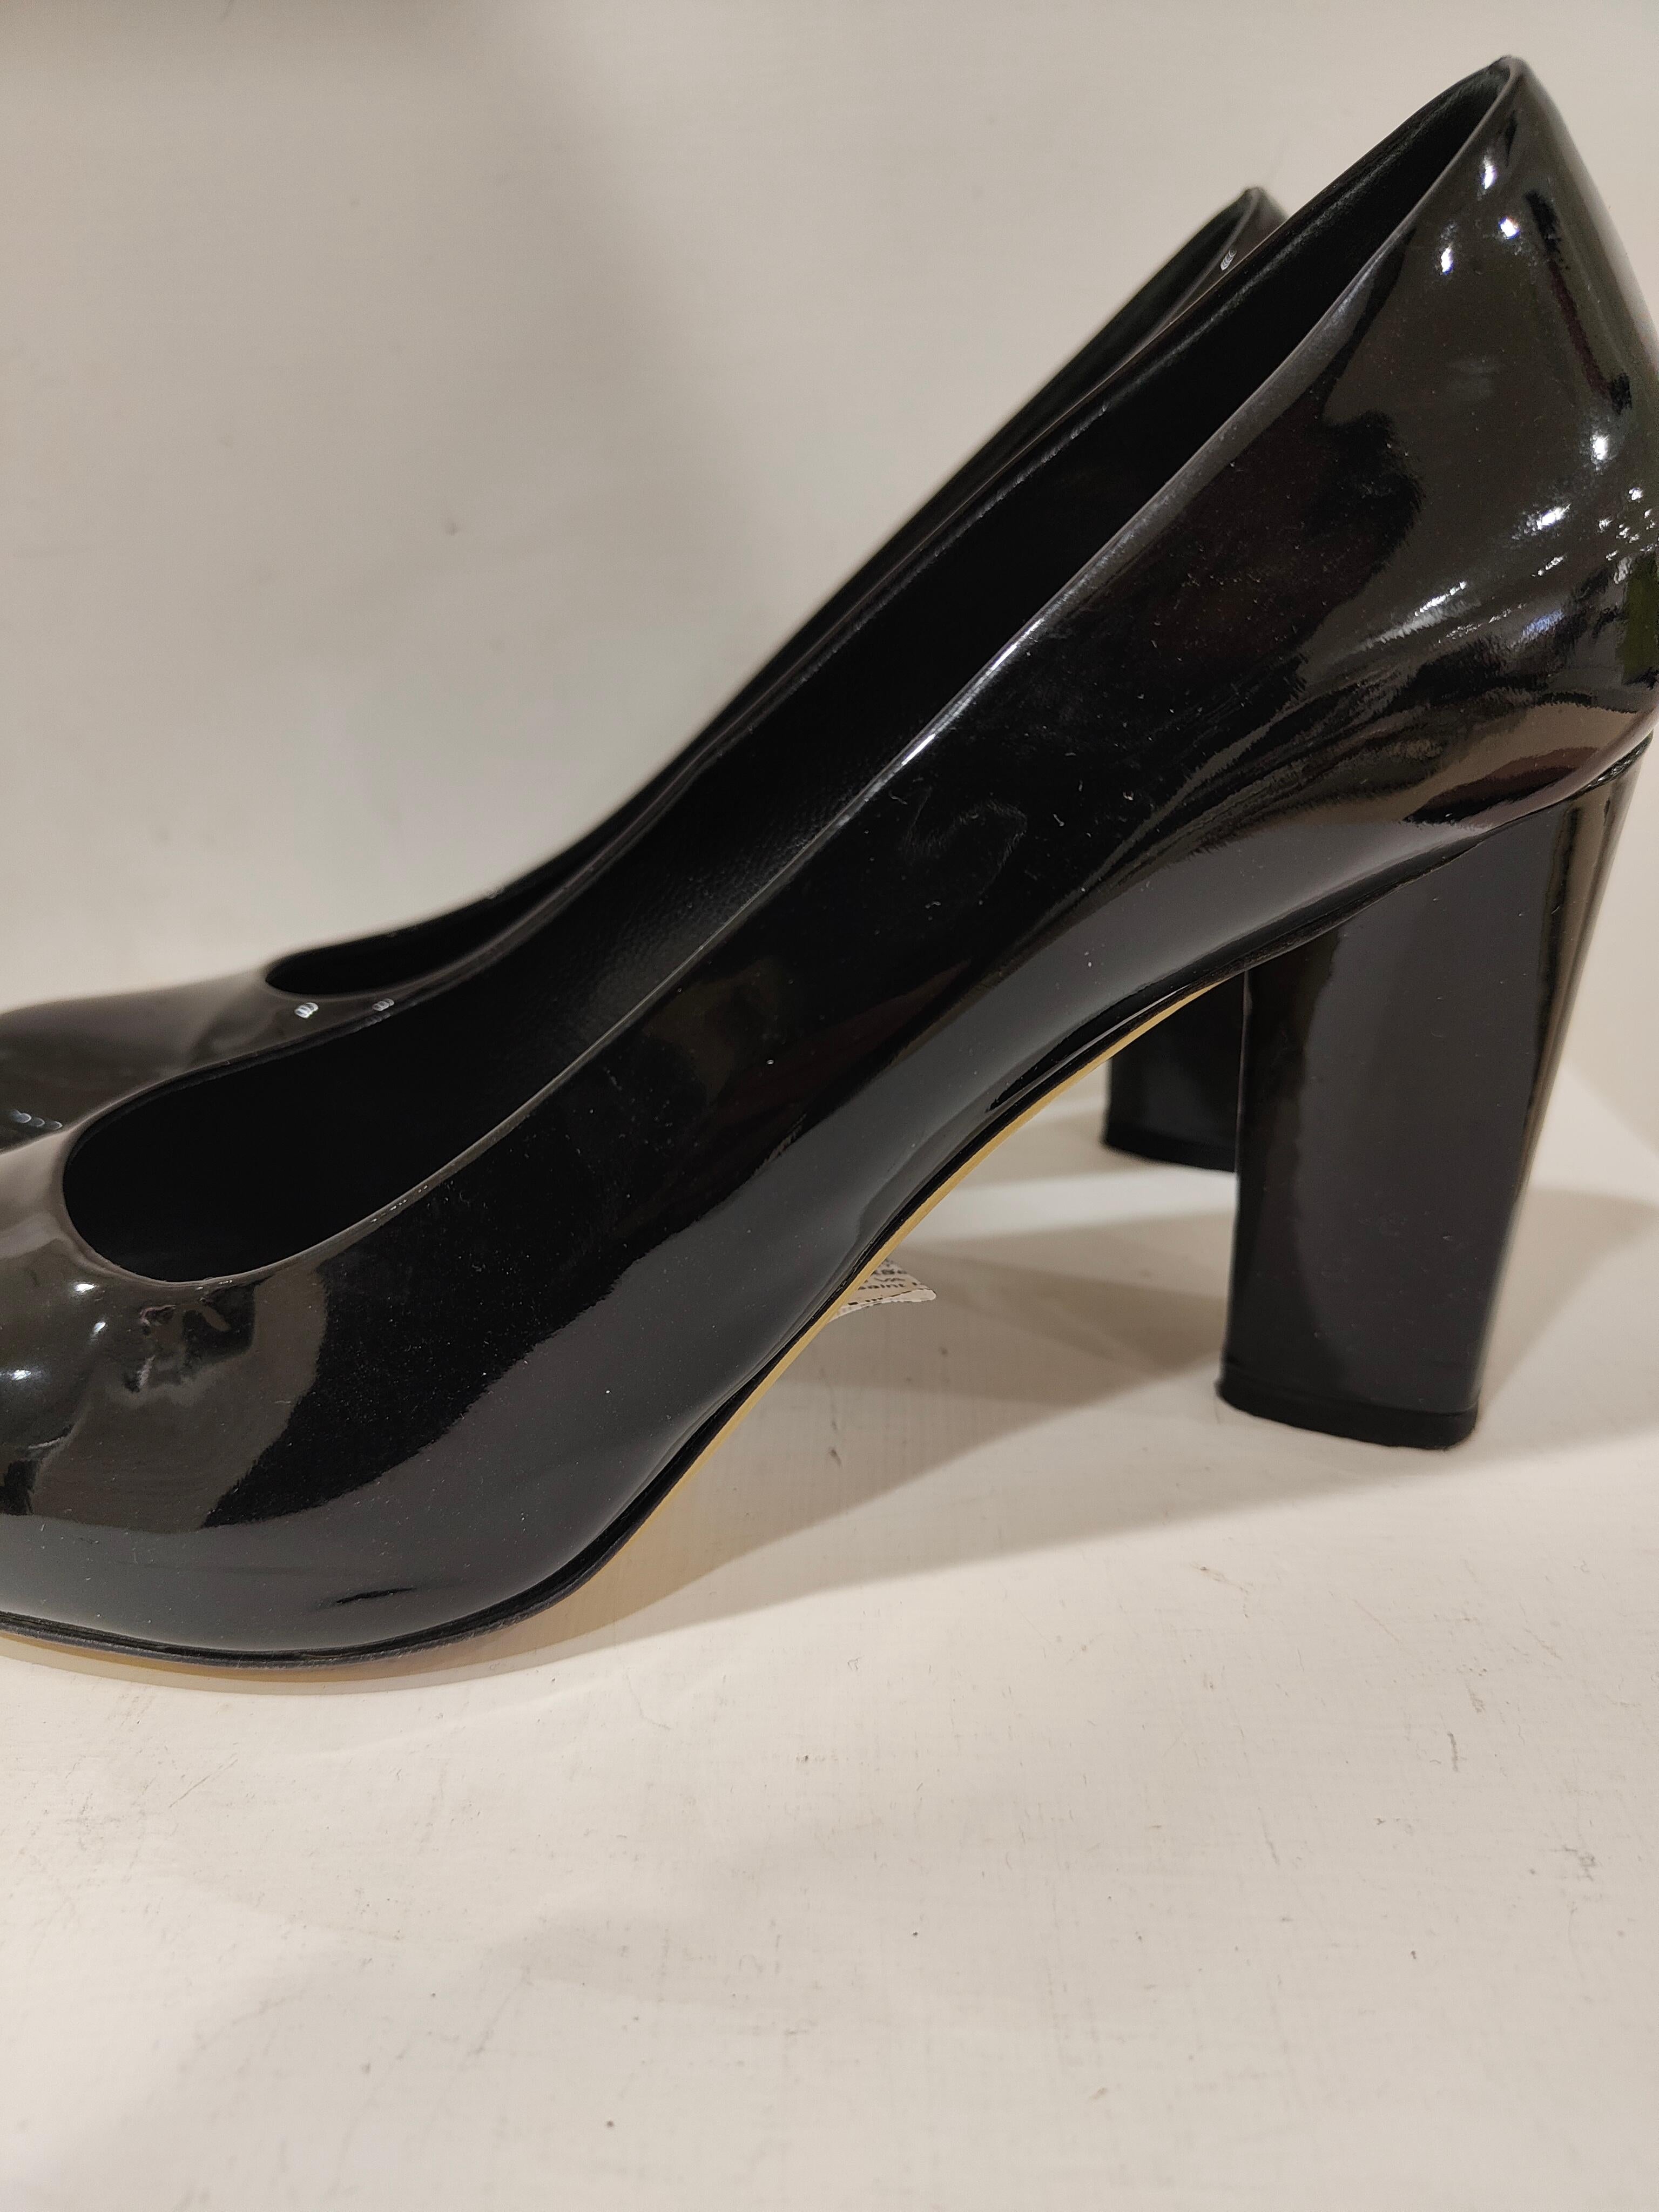 Yves Saint Laurent black patent leather decollete
SIZE 39
Heel: 9 cm 